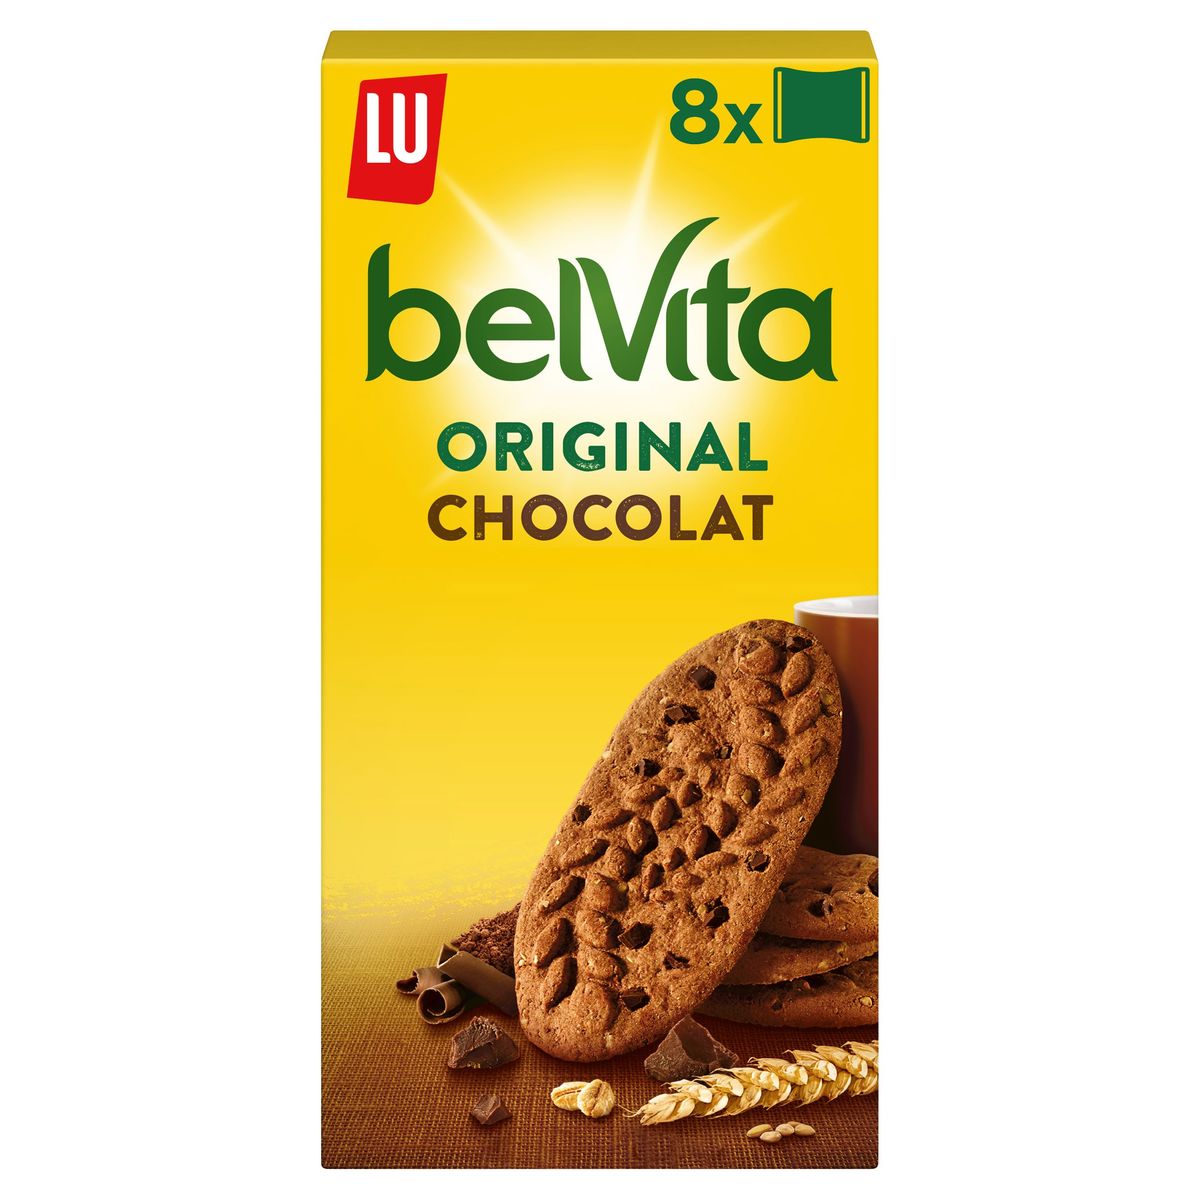 BelVita Petit Déjeuner Biscuits Chocolat 400 g